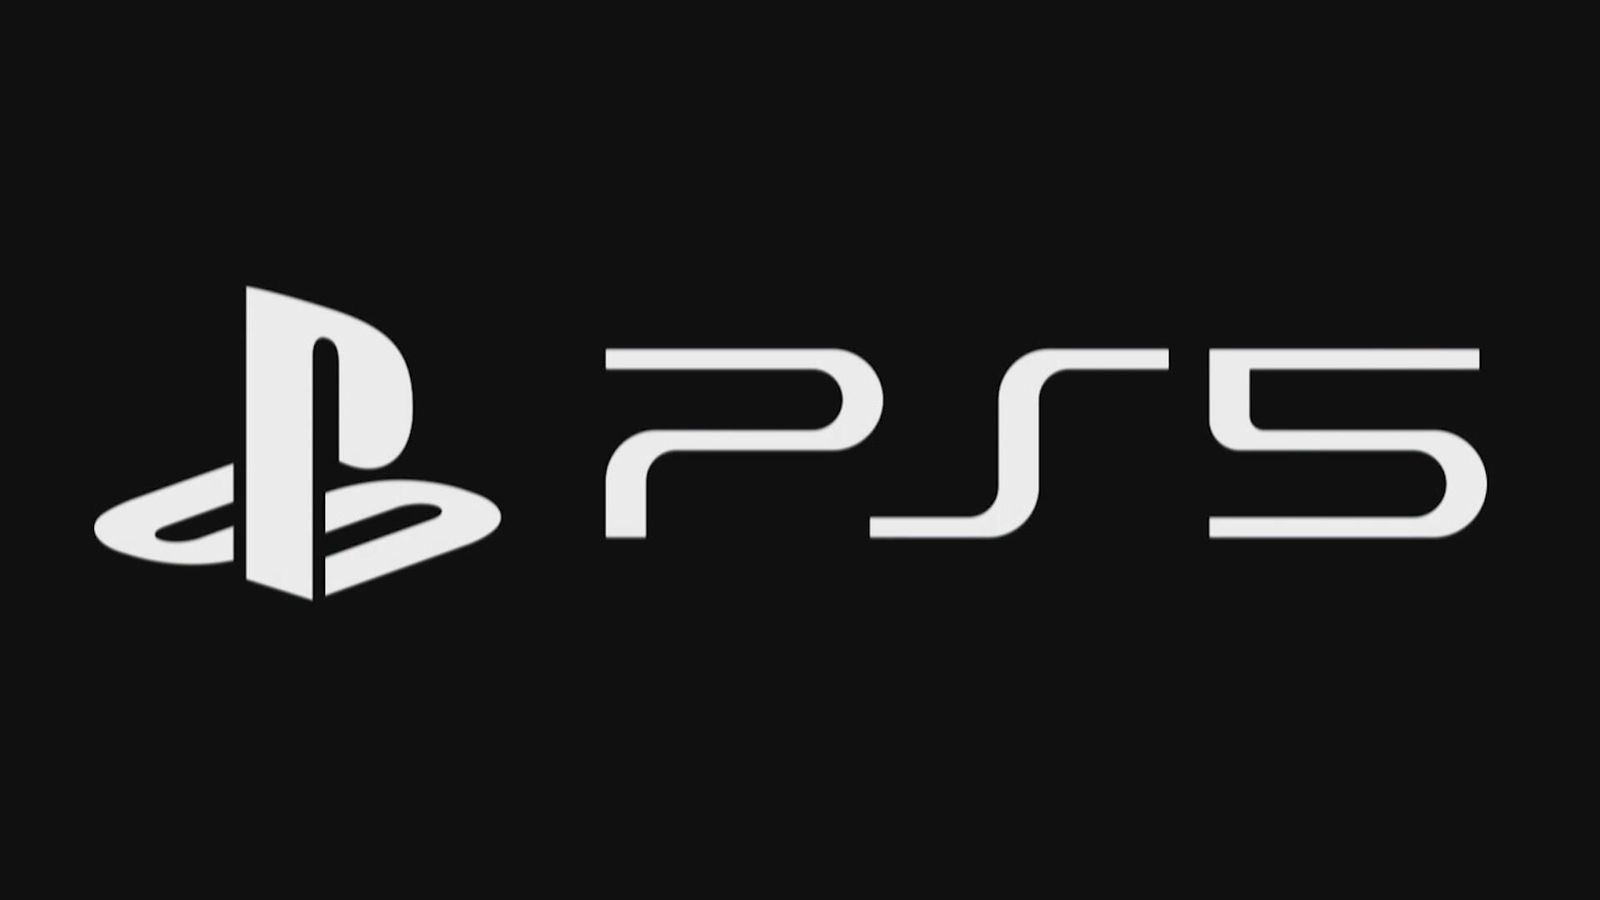 The new PlayStation 5 logo